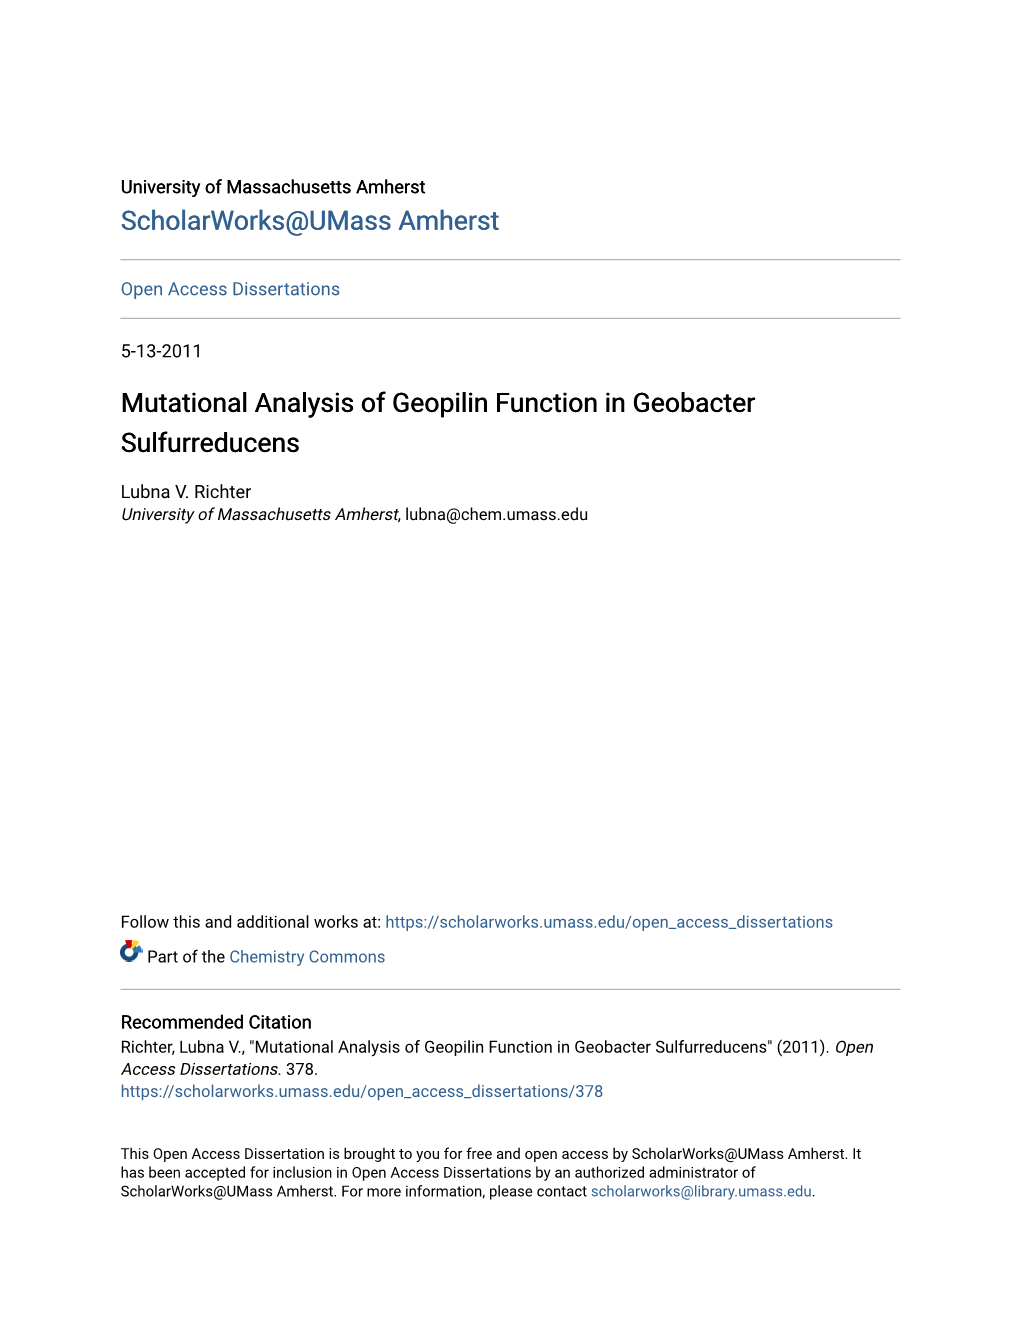 Mutational Analysis of Geopilin Function in Geobacter Sulfurreducens